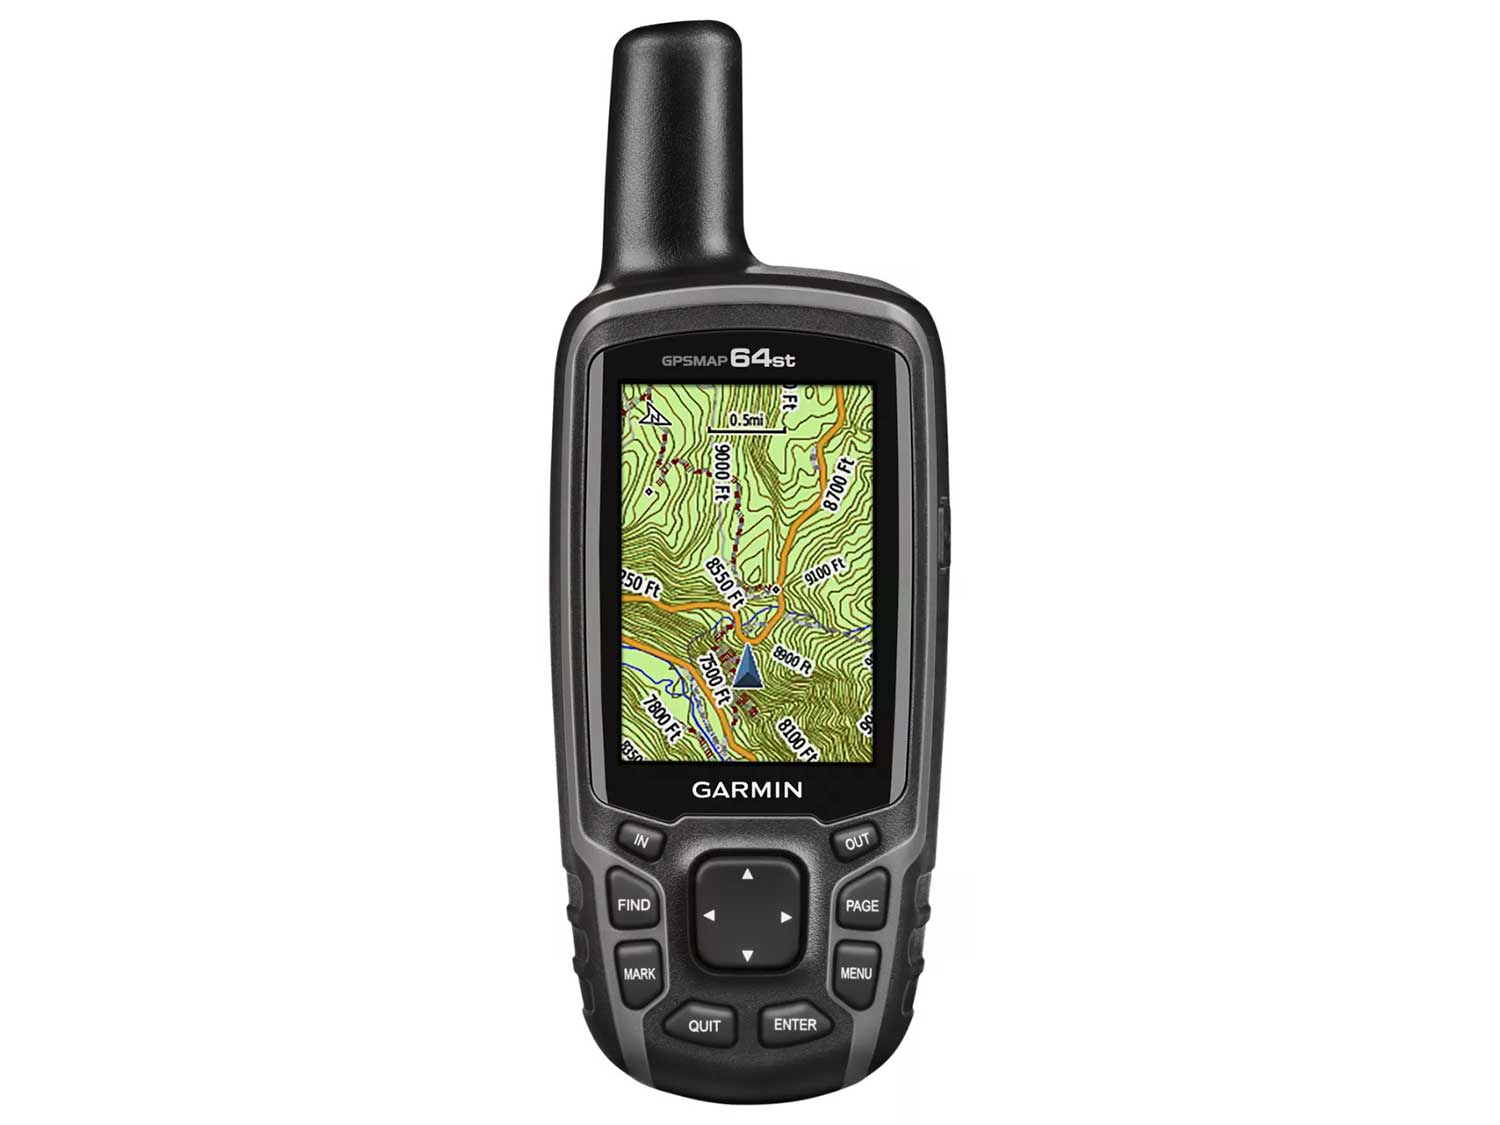 Garmin 64st Handheld GPS